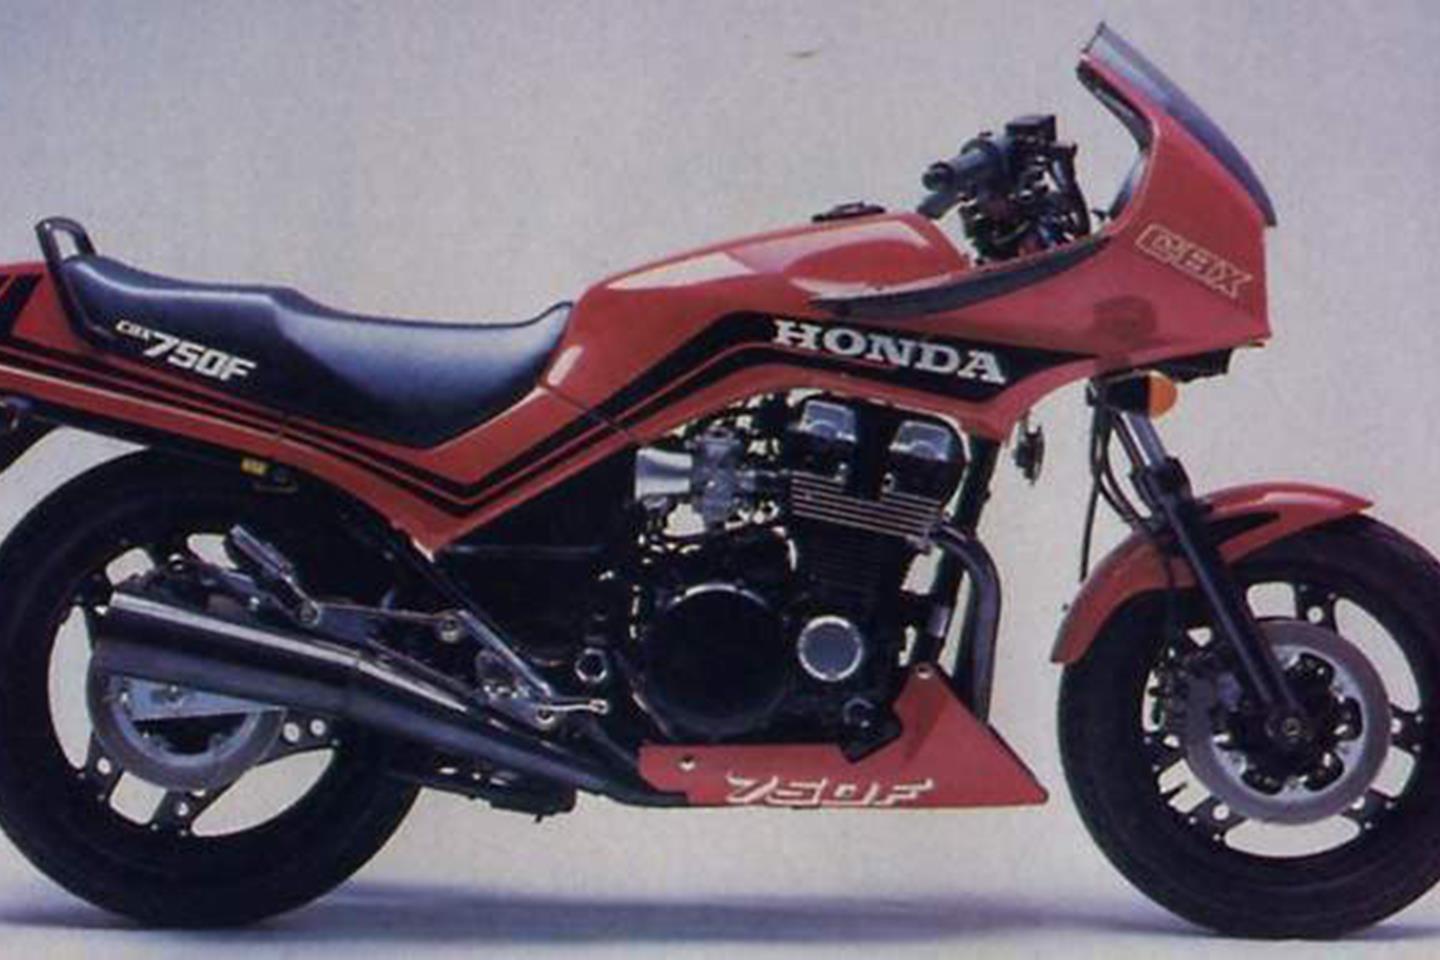 Why won't my Honda CBX750 run properly?